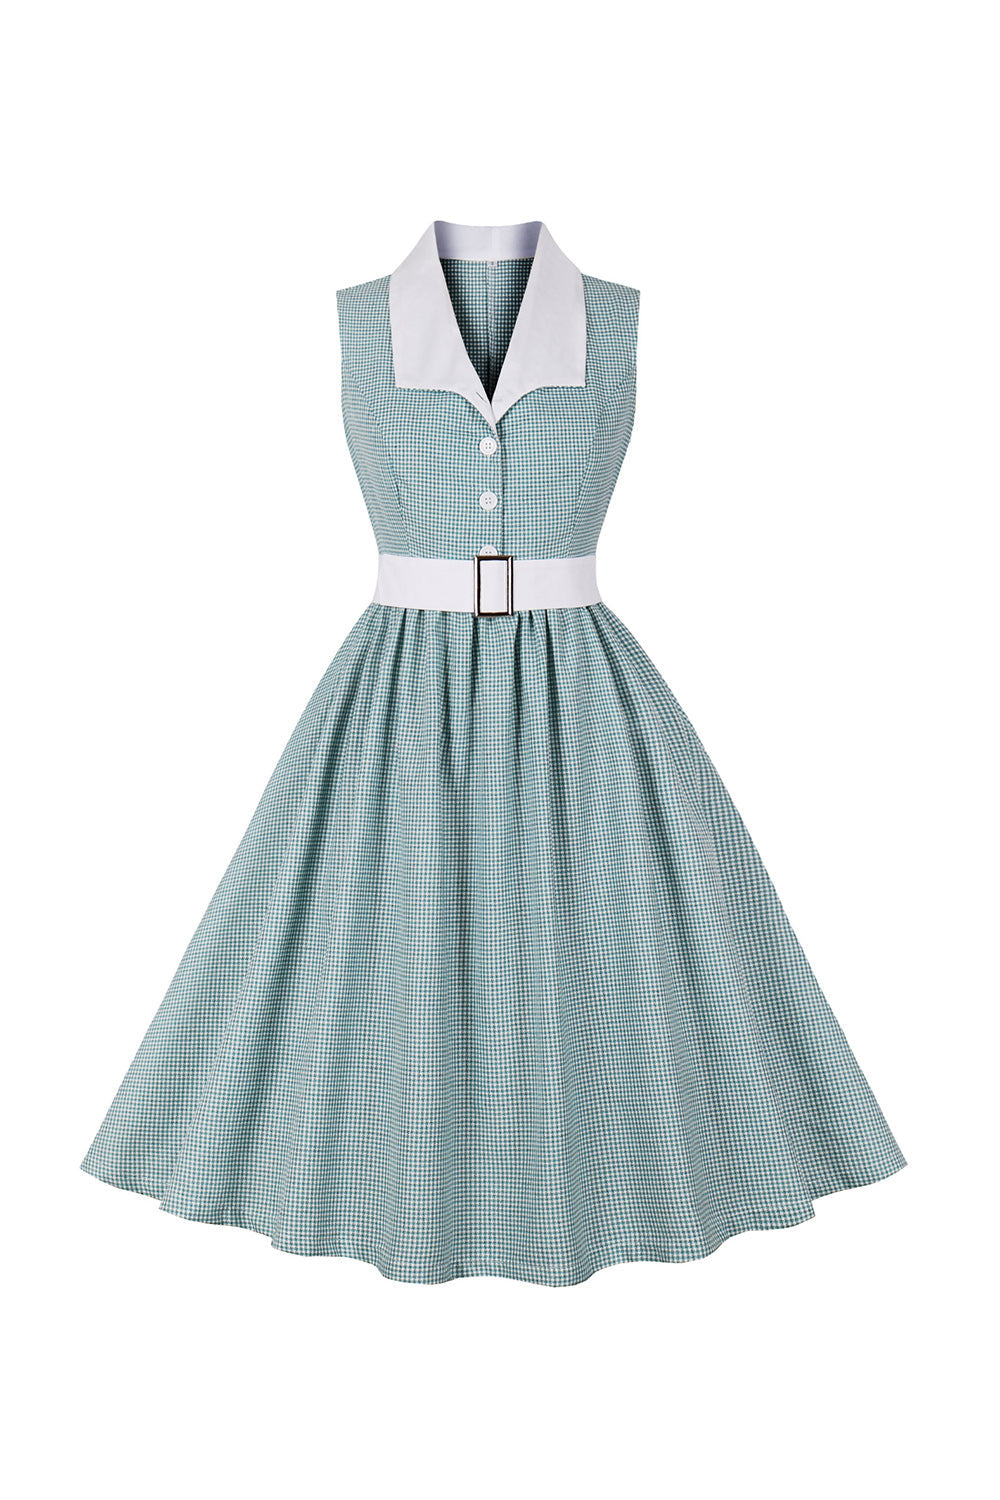 Green Plaid Swing 1950s Dress with Belt